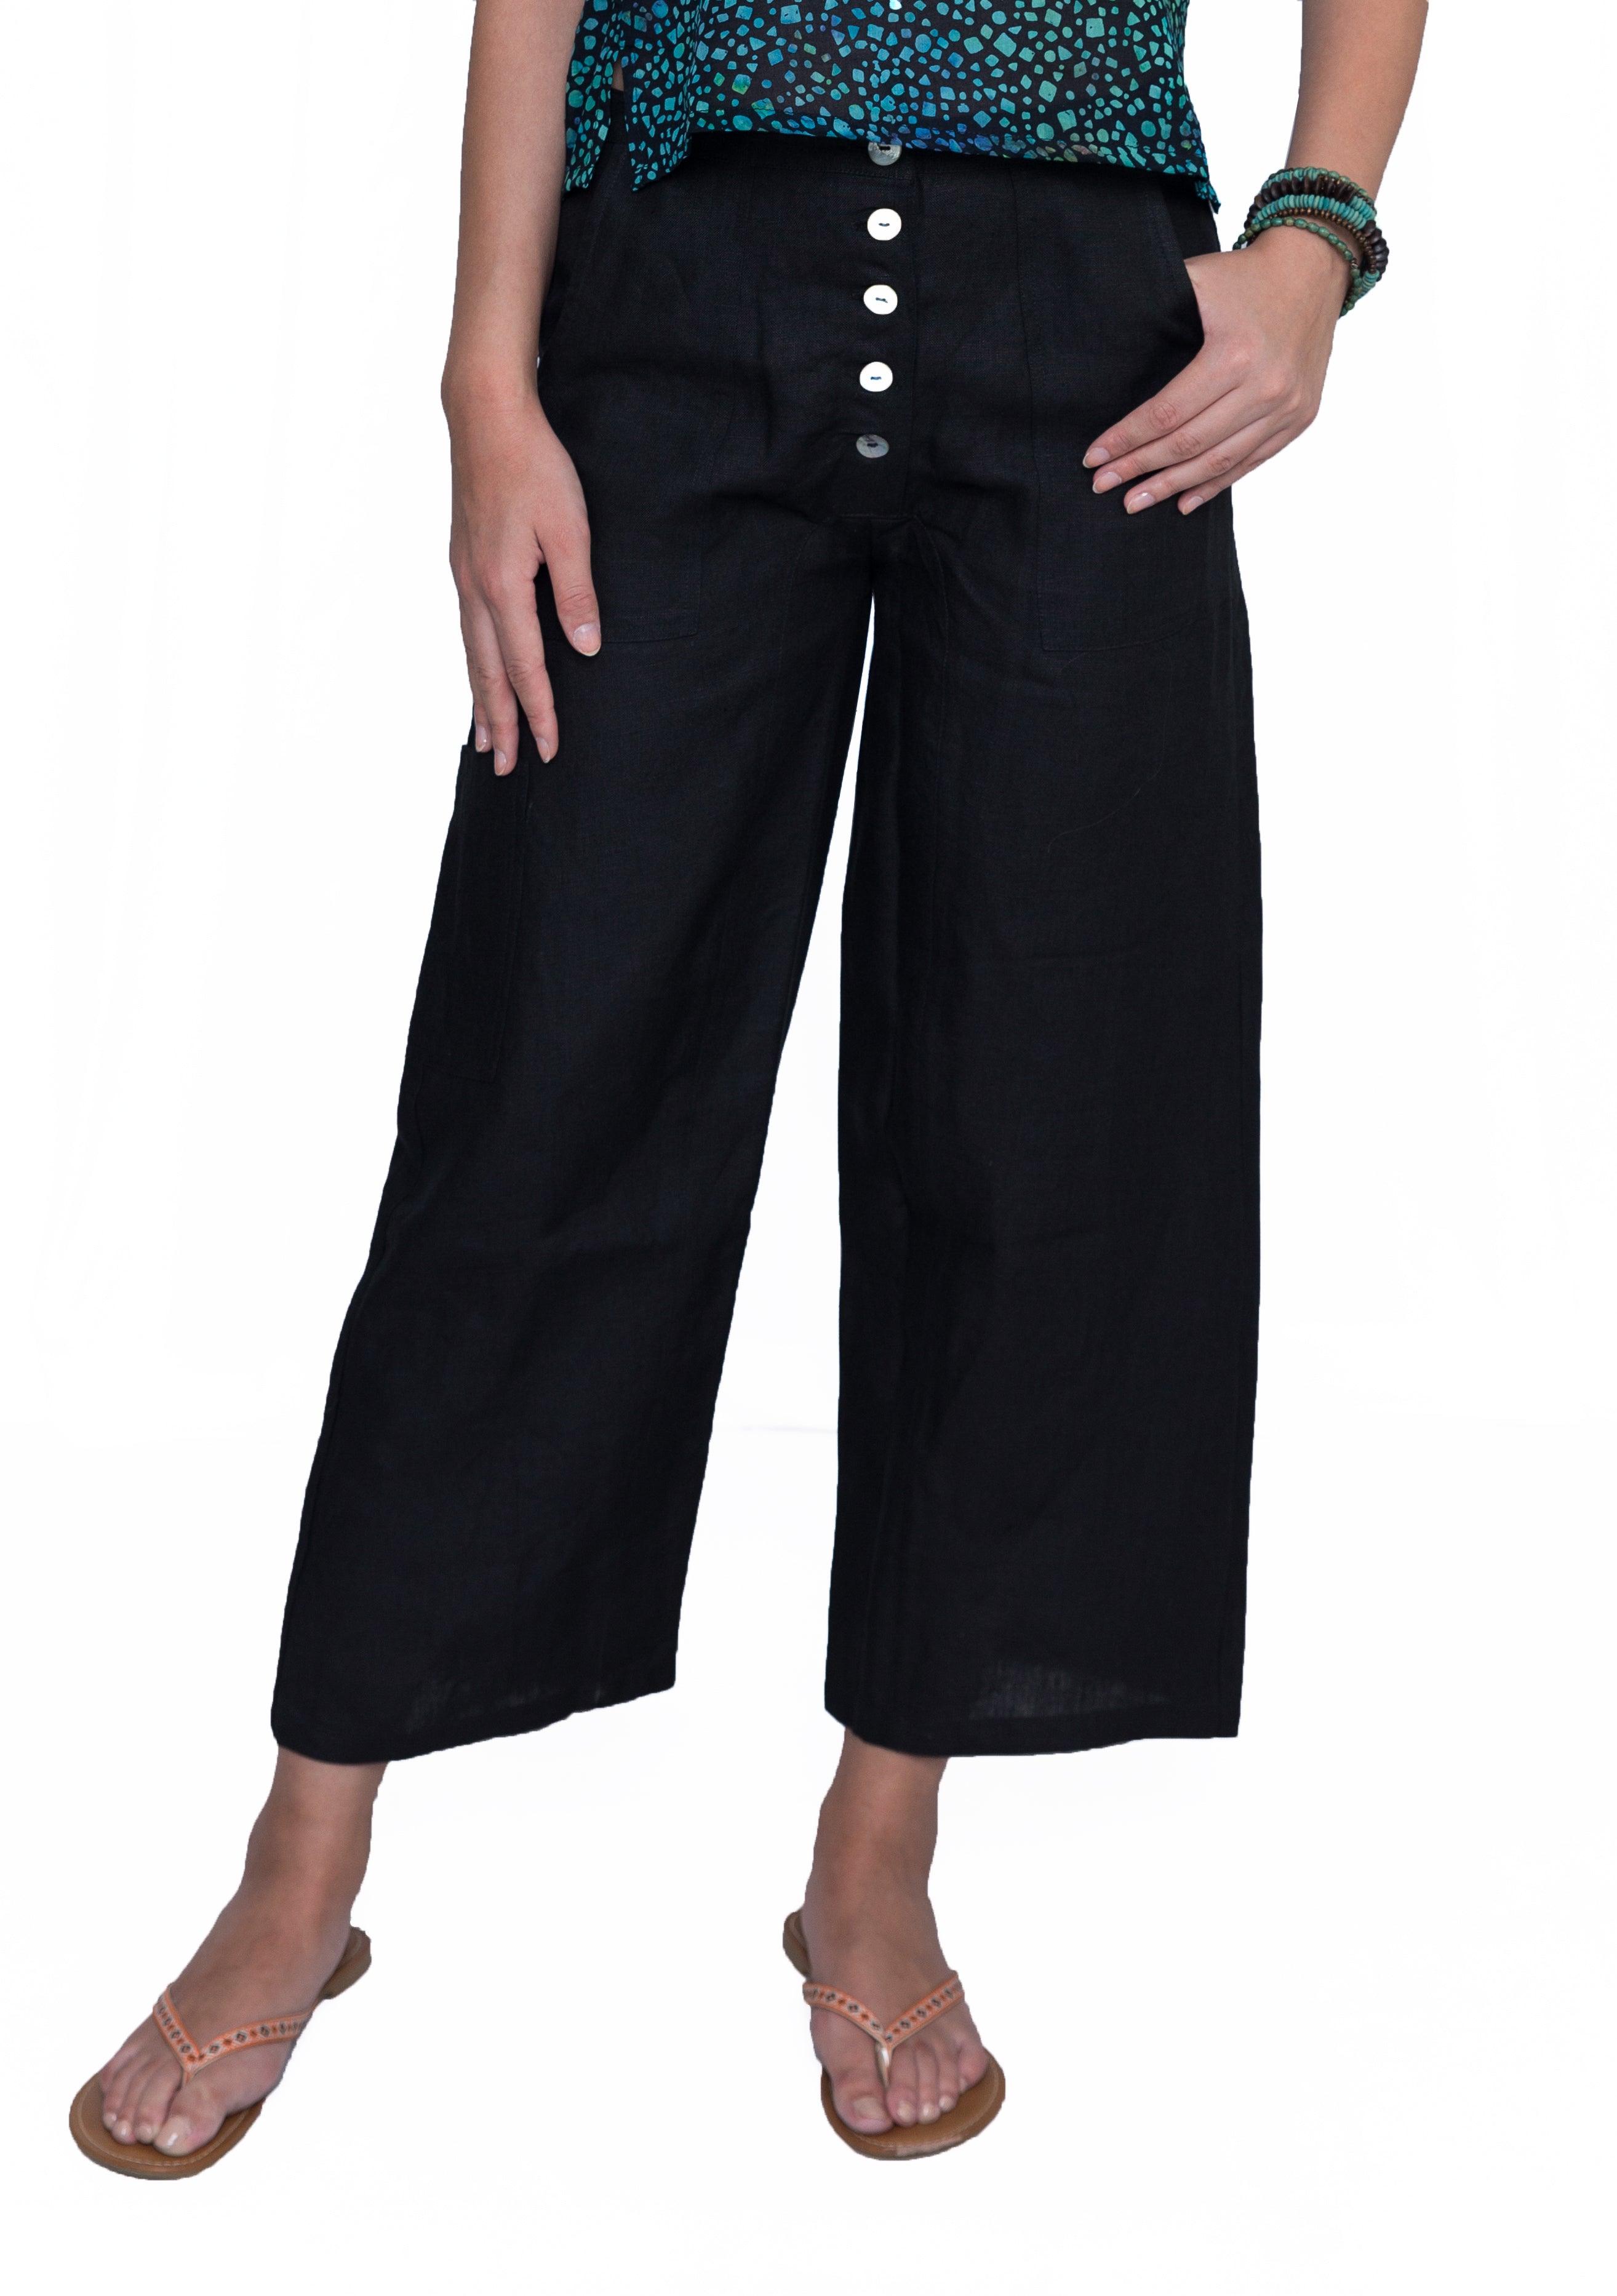 Linen pants for women